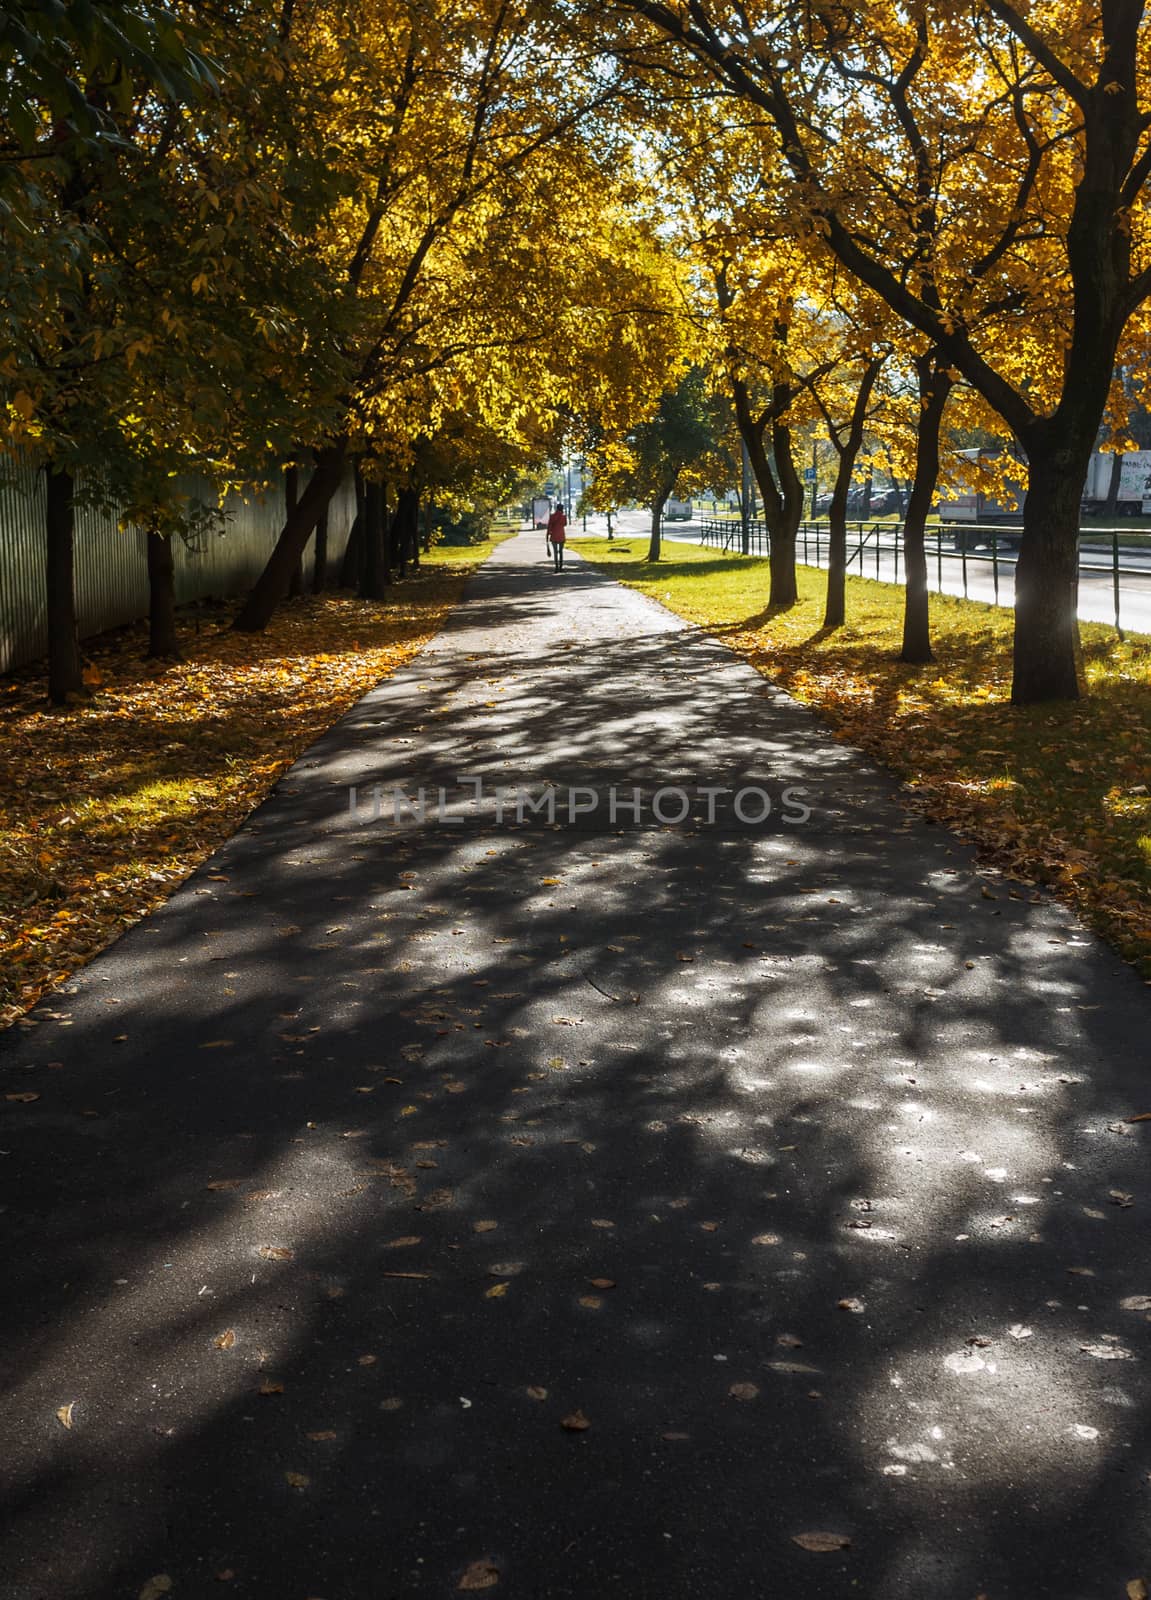 Yellow fallen leaves on the asphalt path among yellow trees